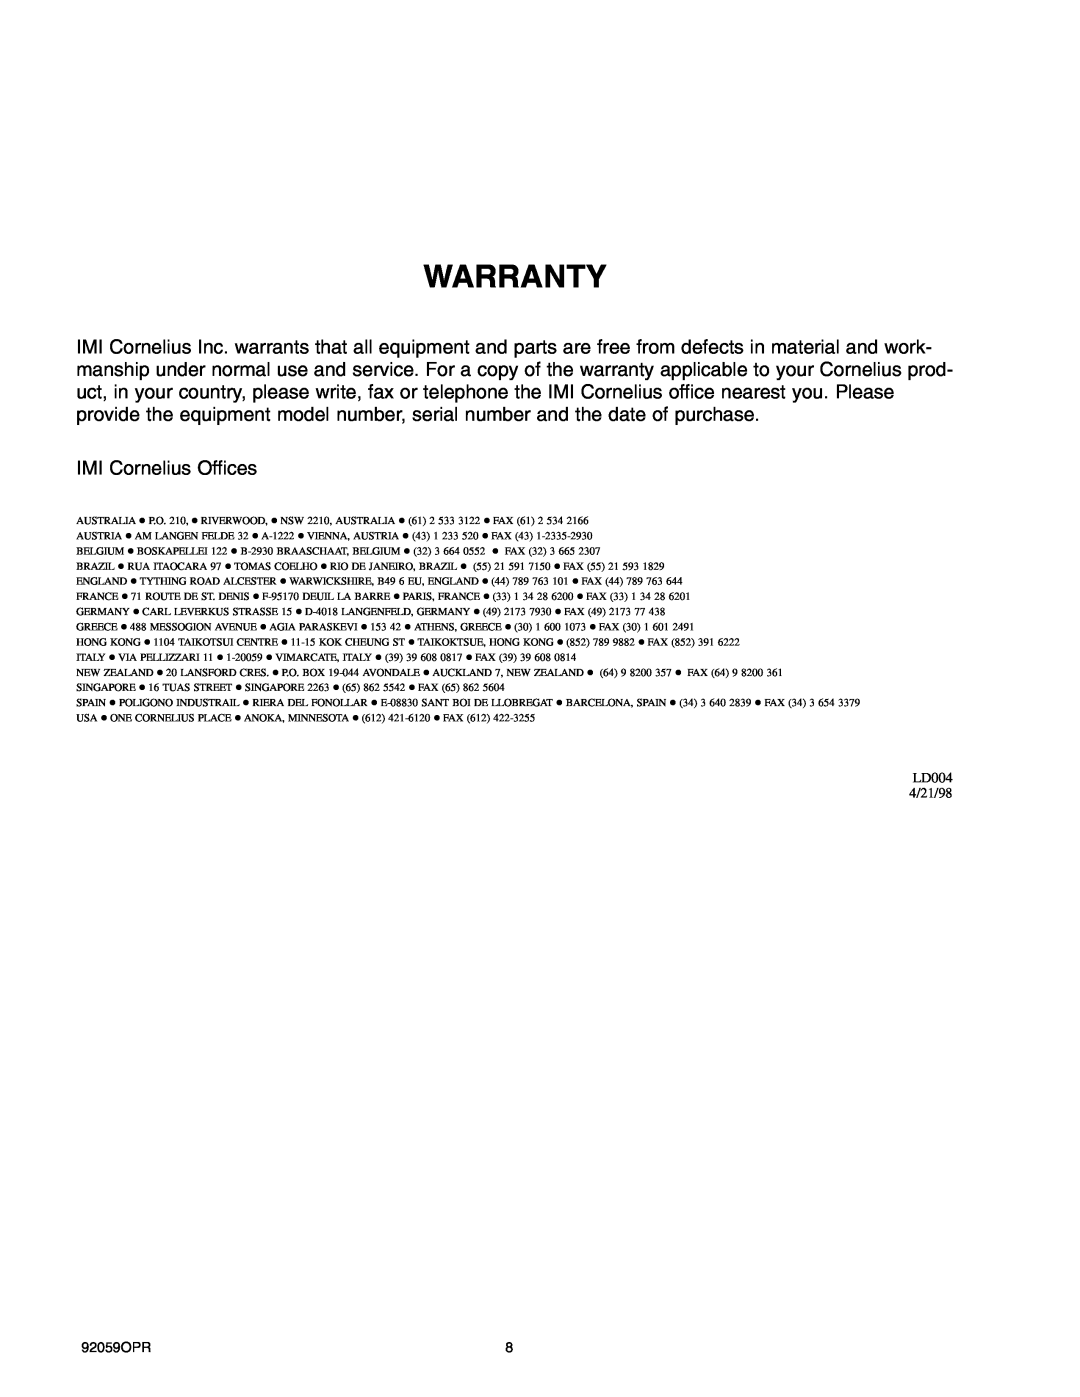 Cornelius ED 300 BC manual Warranty, IMI Cornelius Offices, LD004 4/21/98, 92059OPR 